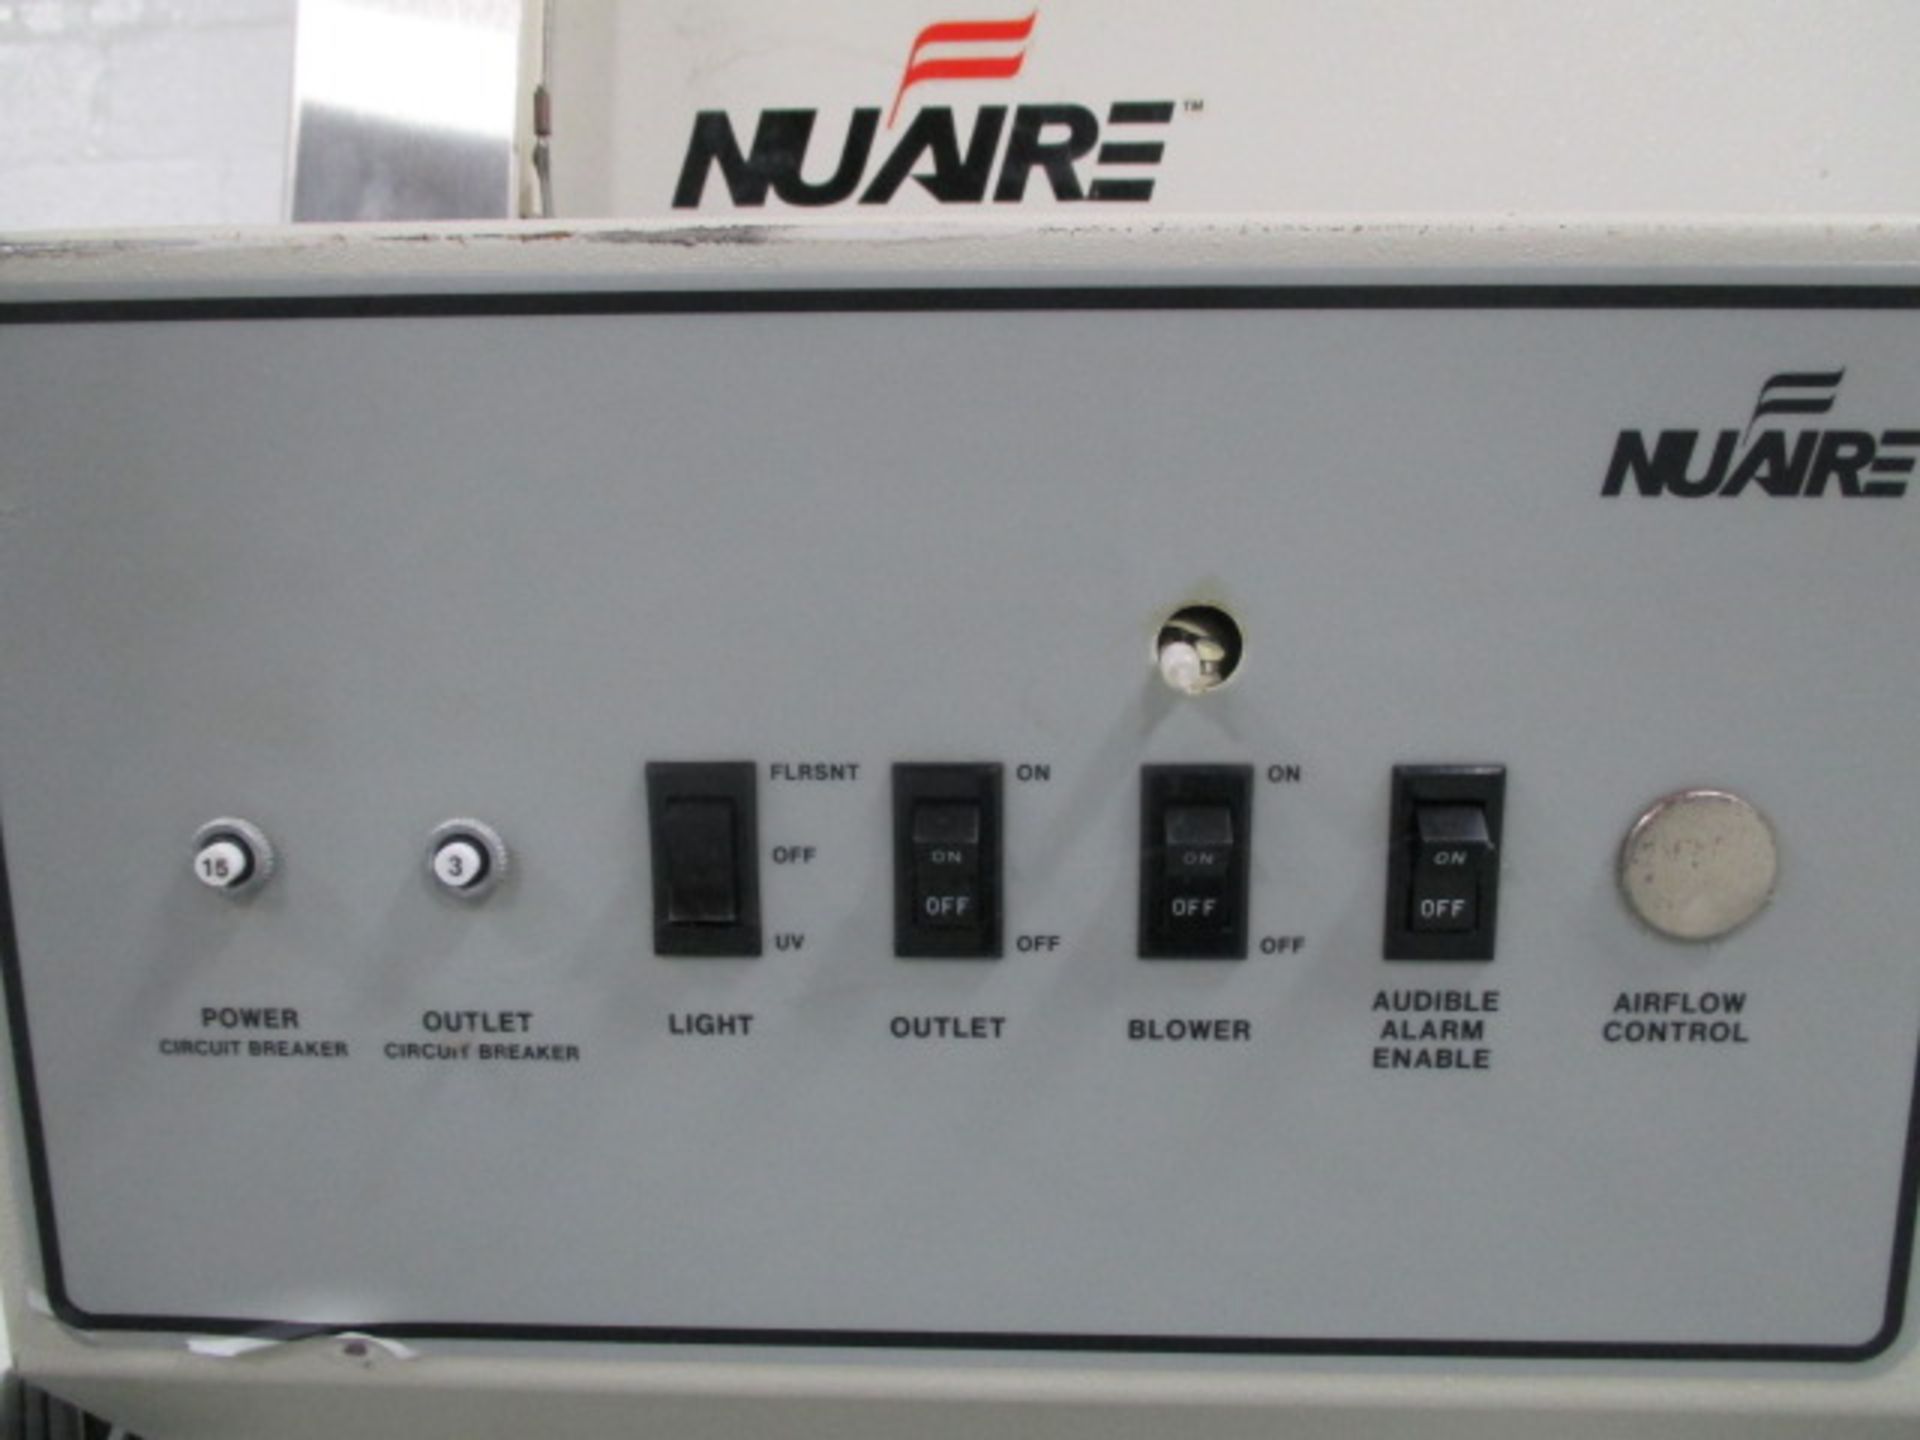 Nuaire hood, model NU-425-600, 72" wide x 24" deep x 29" high chamber, Class II Type A/B3 - Image 6 of 9